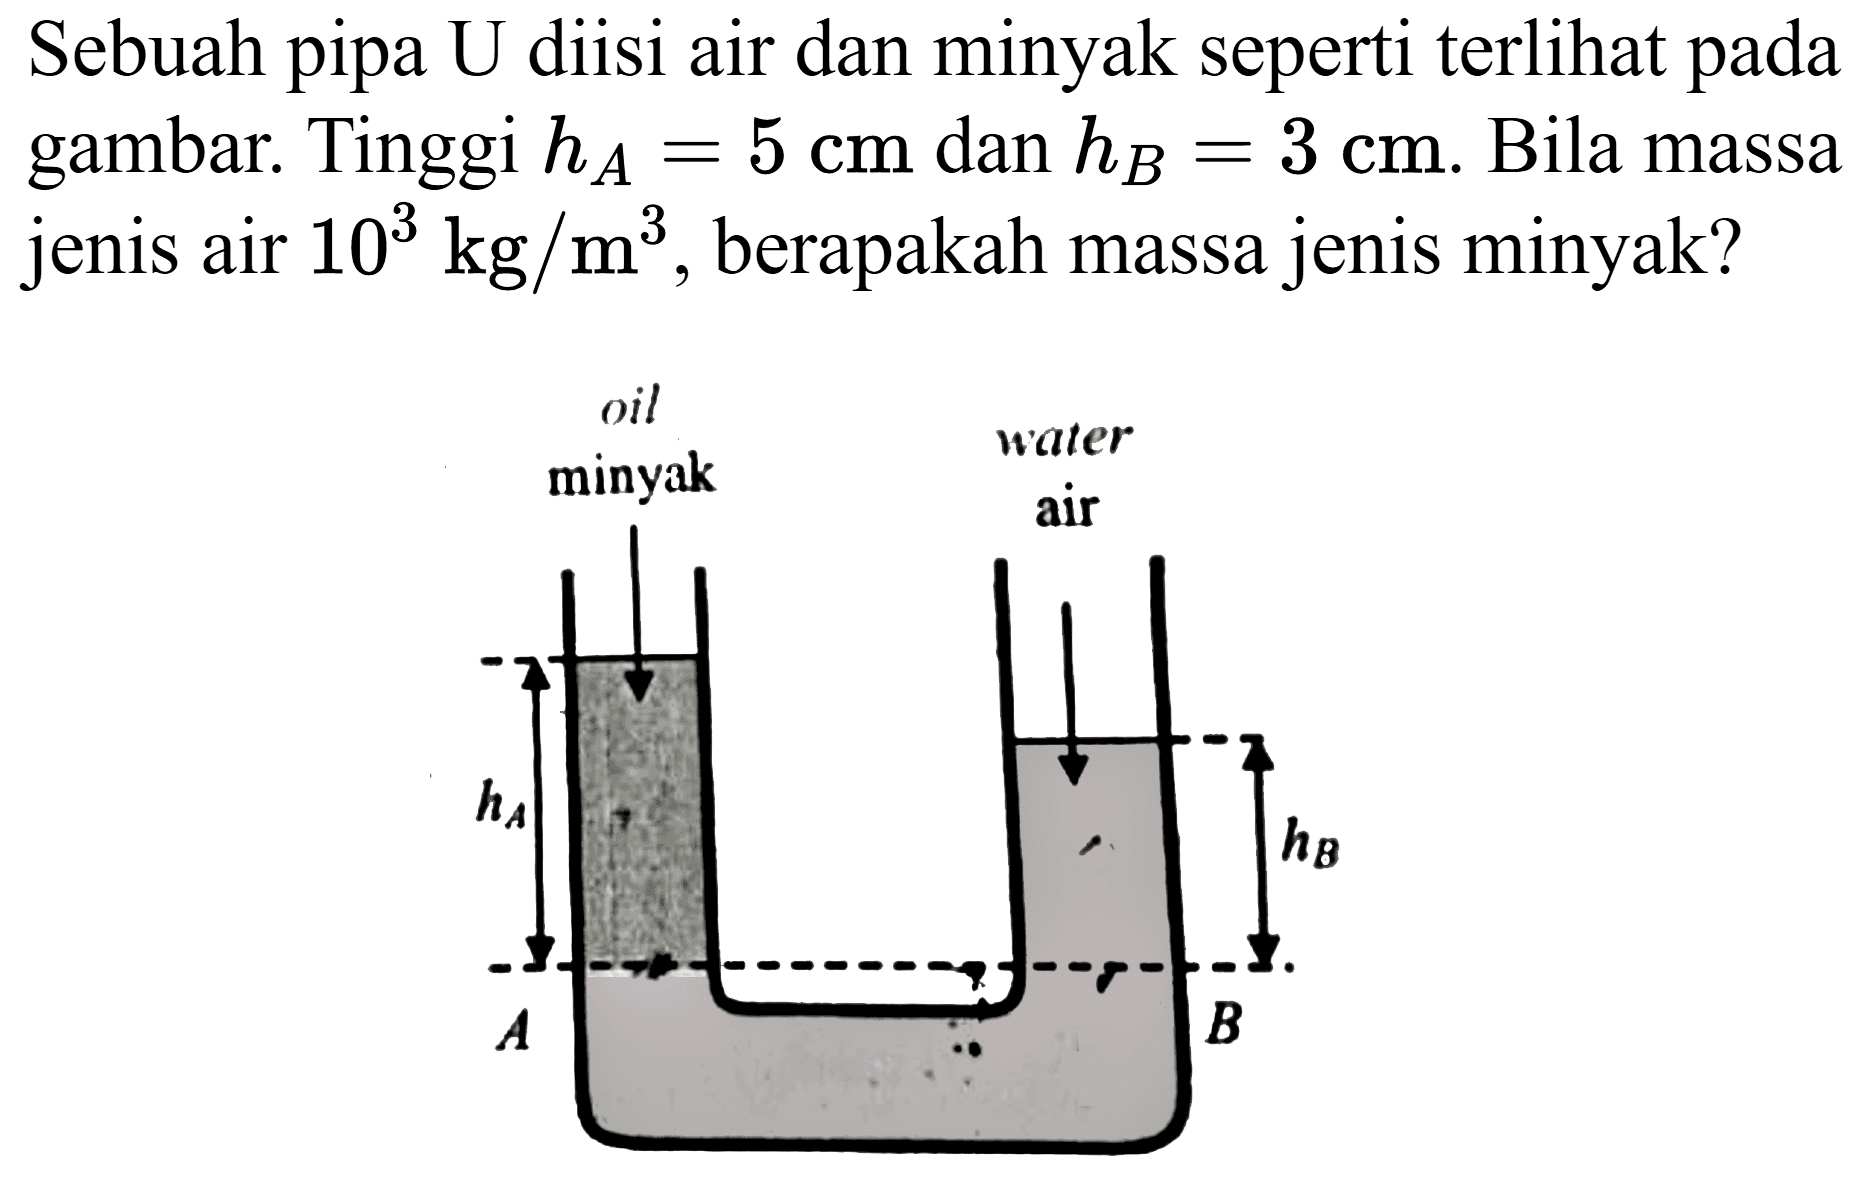 Sebuah pipa  U  diisi air dan minyak seperti terlihat pada gambar. Tinggi  h_(A)=5 cm  dan  h_(B)=3 cm . Bila massa jenis air  10^(3) kg / m^(3) , berapakah massa jenis minyak?